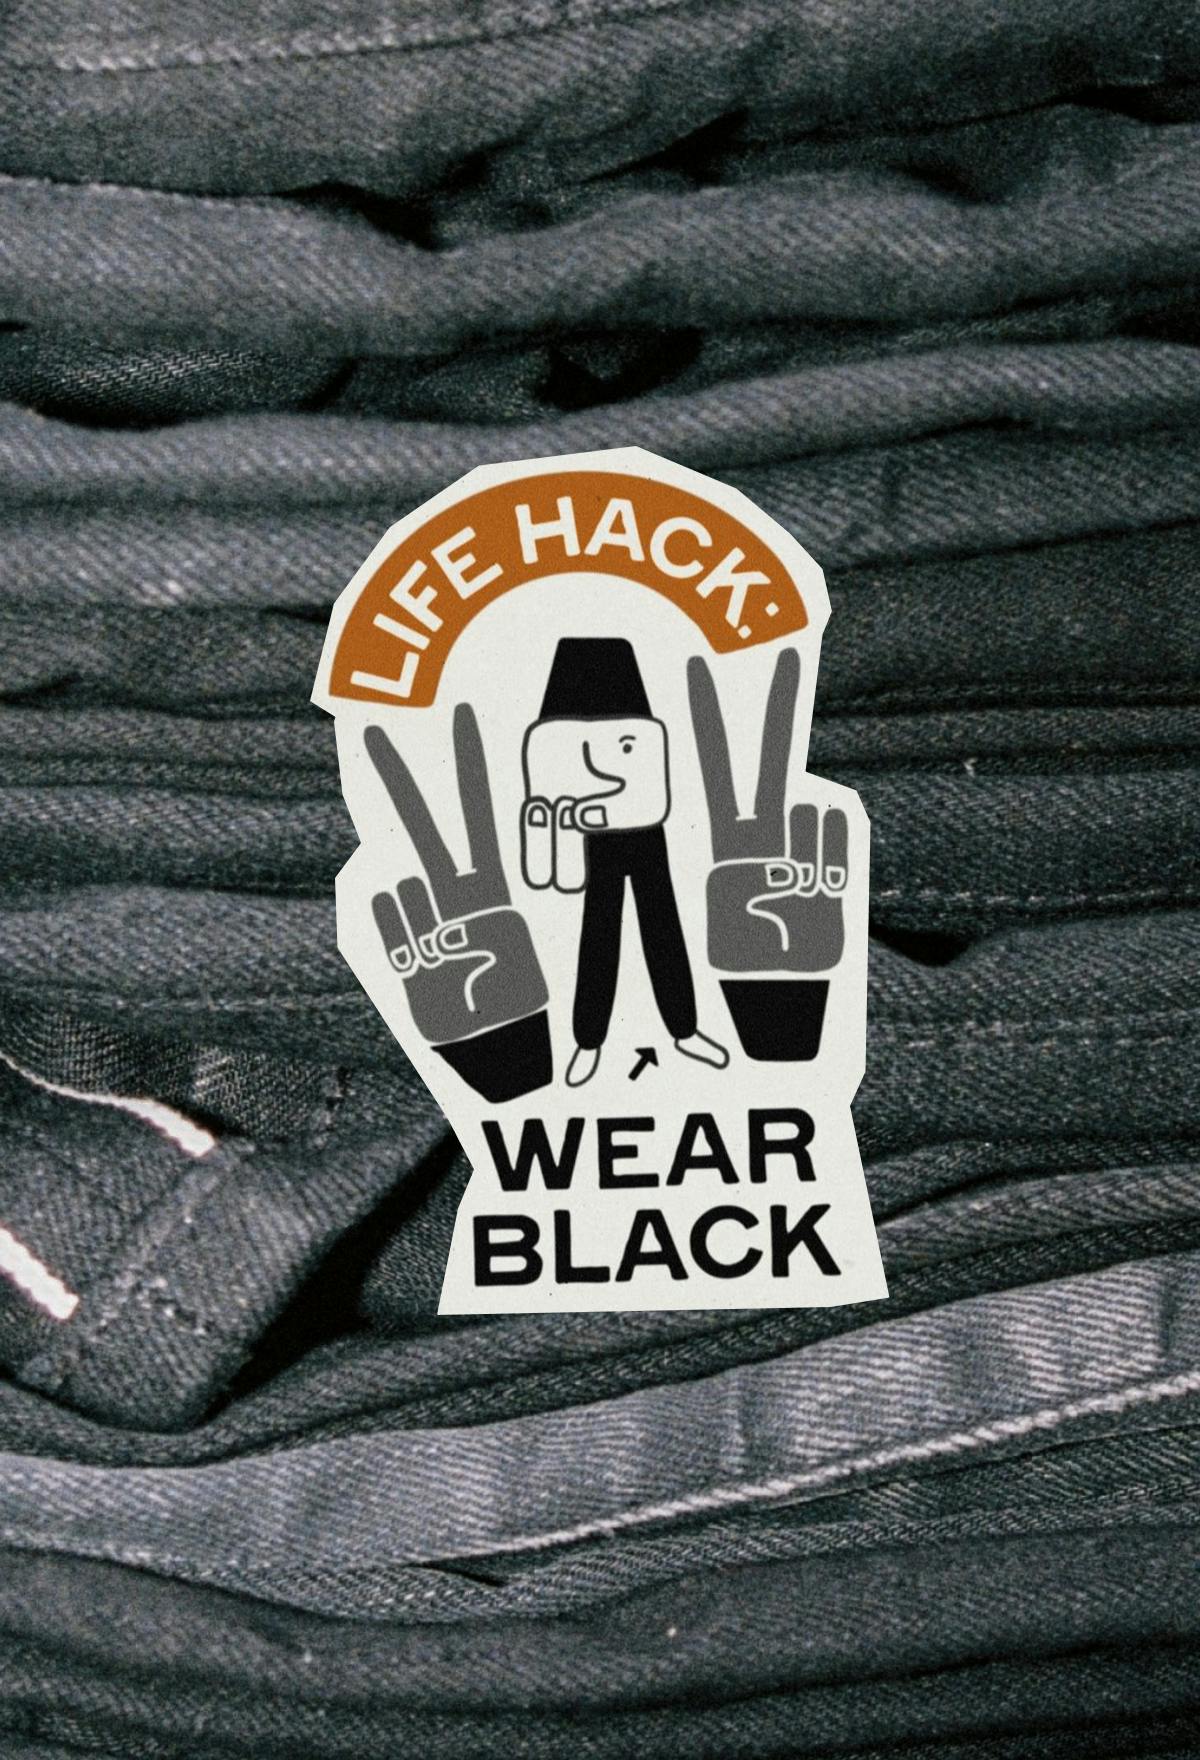 Black Selvage Life Hack Wear Black